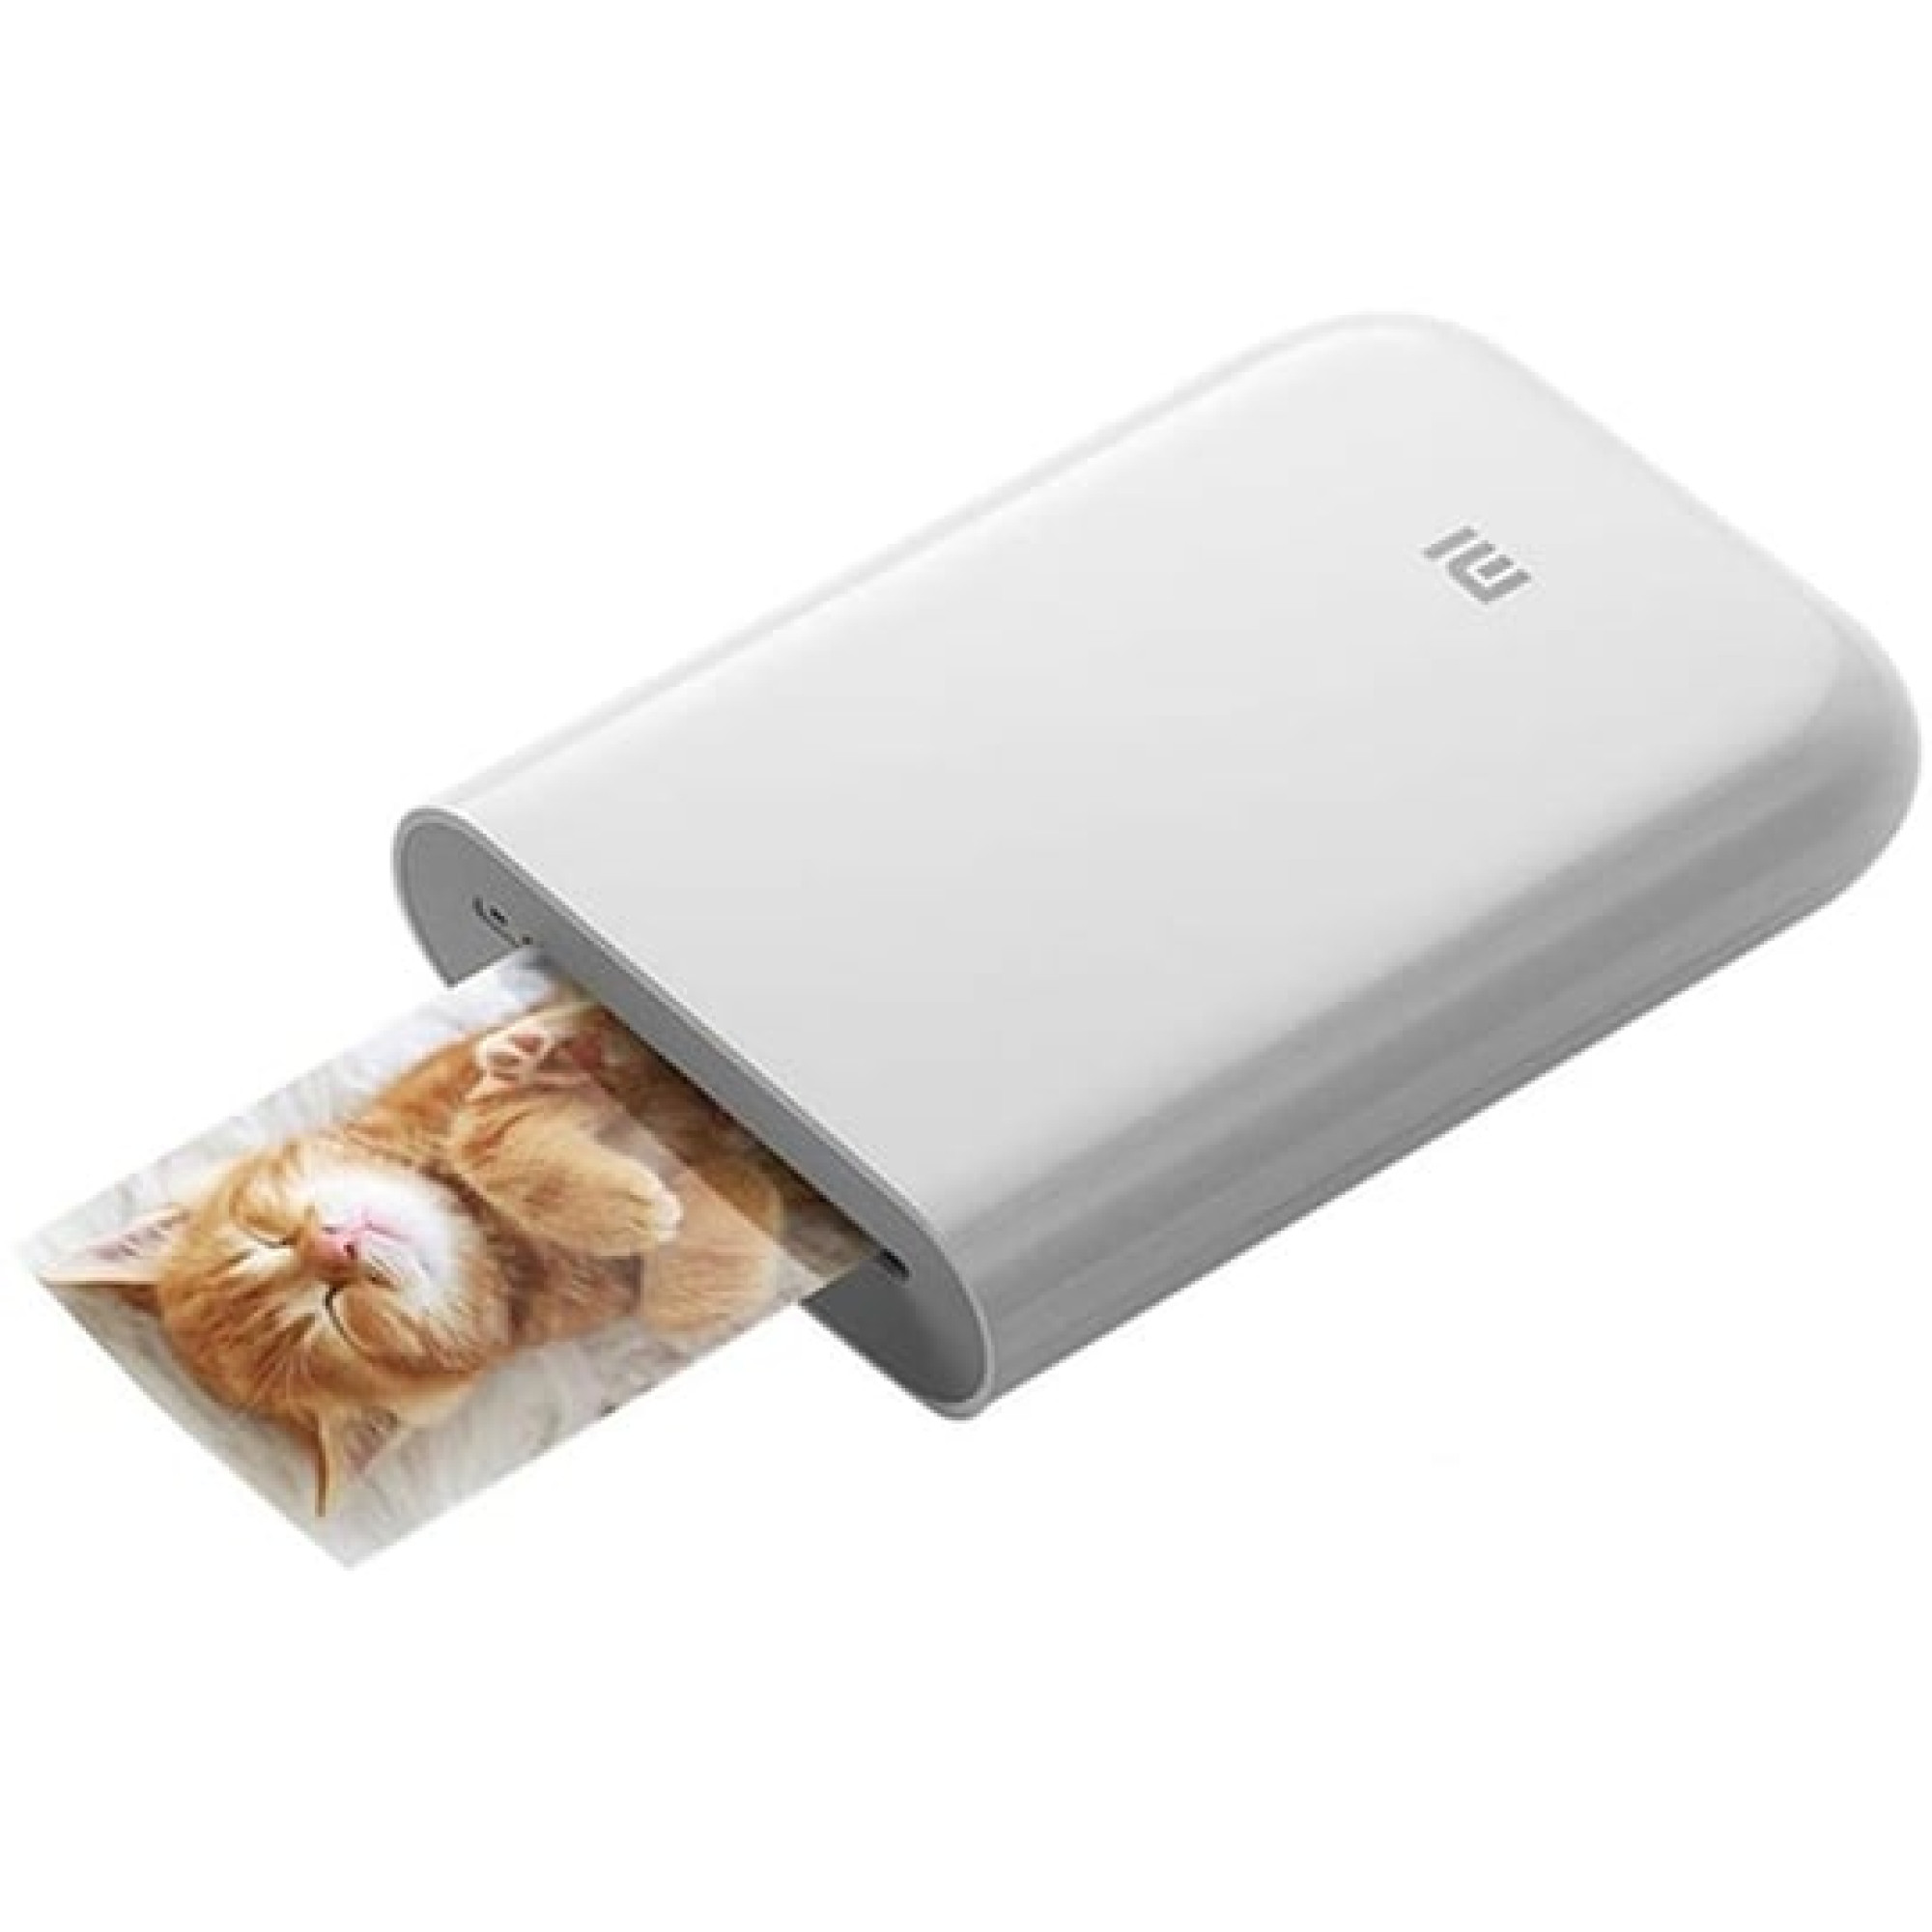 Портативный фотопринтер Xiaomi Mi Portable Photo Printer TEJ4018GL (XMKDDYJ01HT)